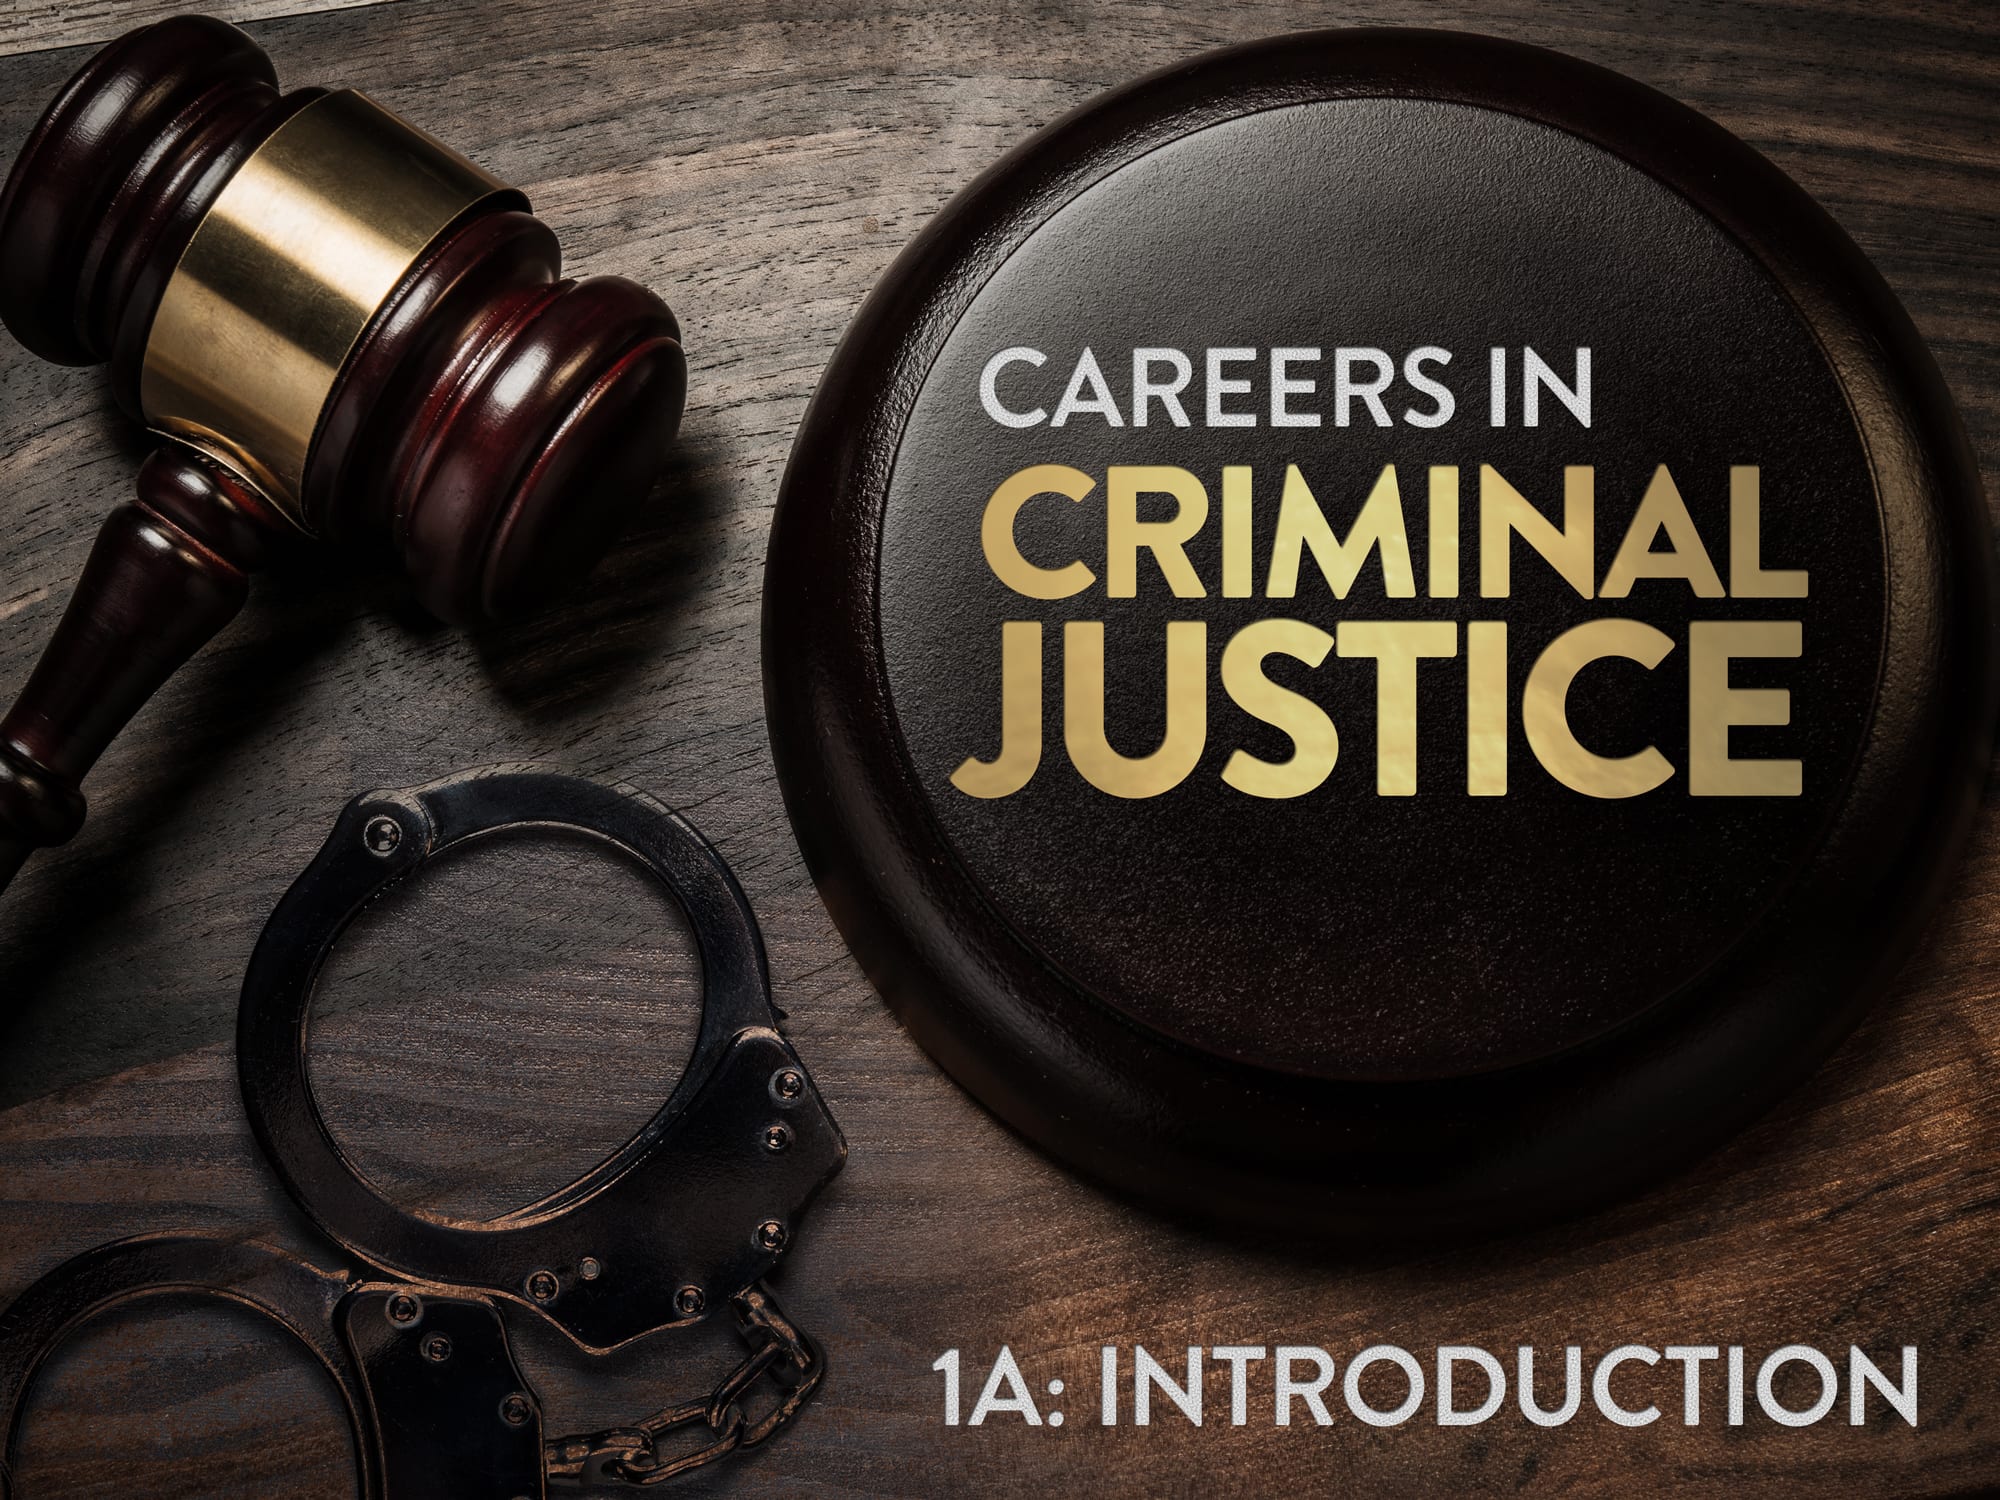 Careers in Criminal Justice